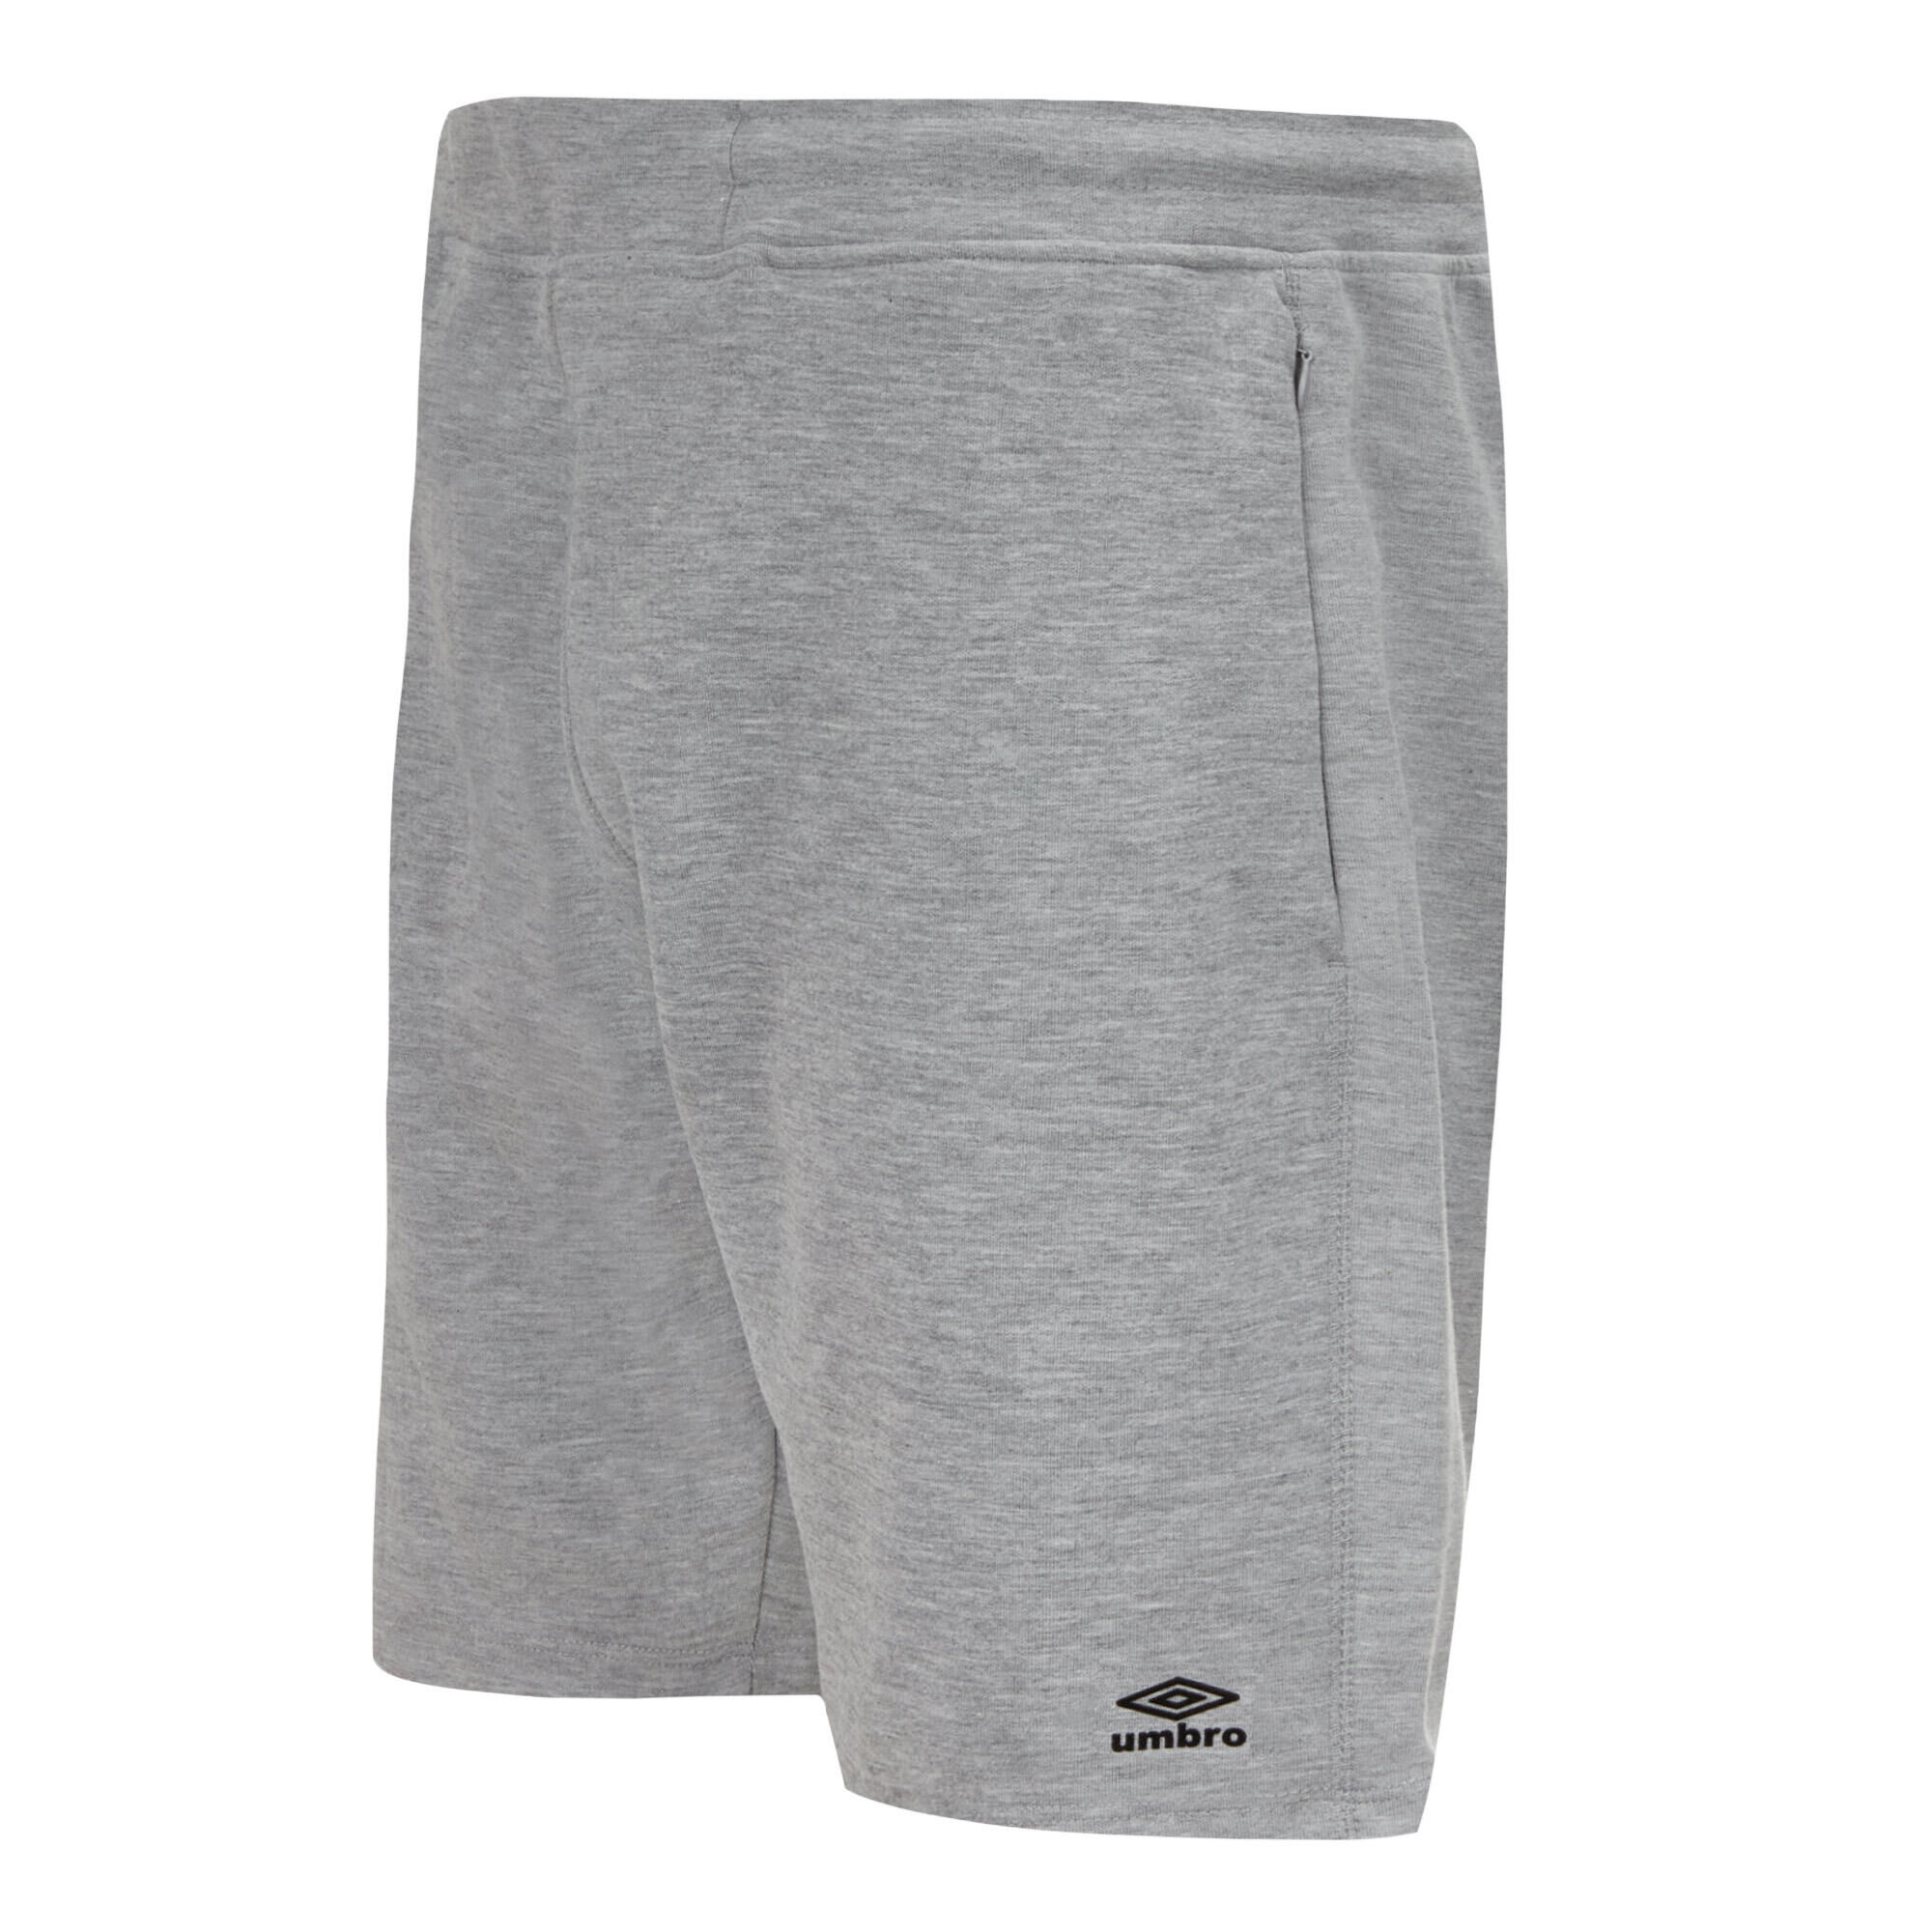 UMBRO Mens Pro Fleece Shorts (Grey Marl/Black)